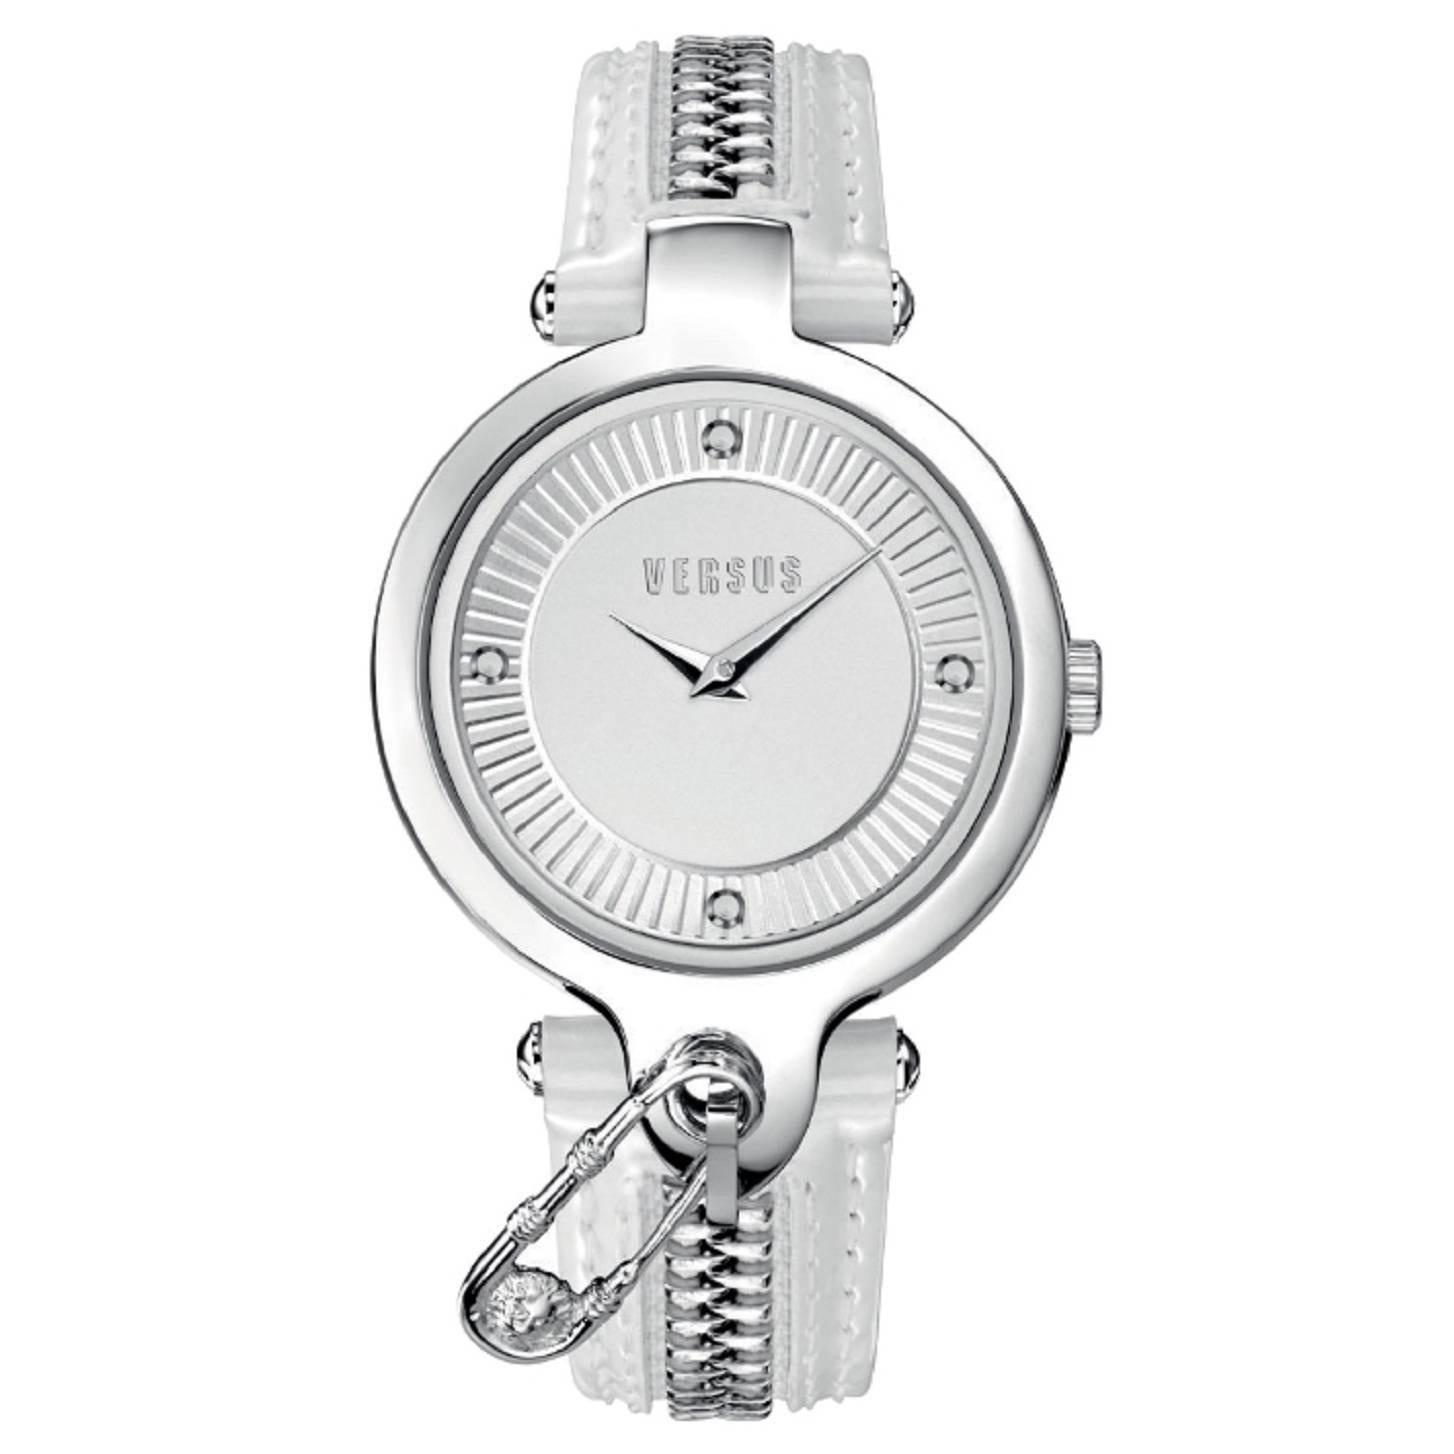 2015 Versus by Gianni Versace white watch